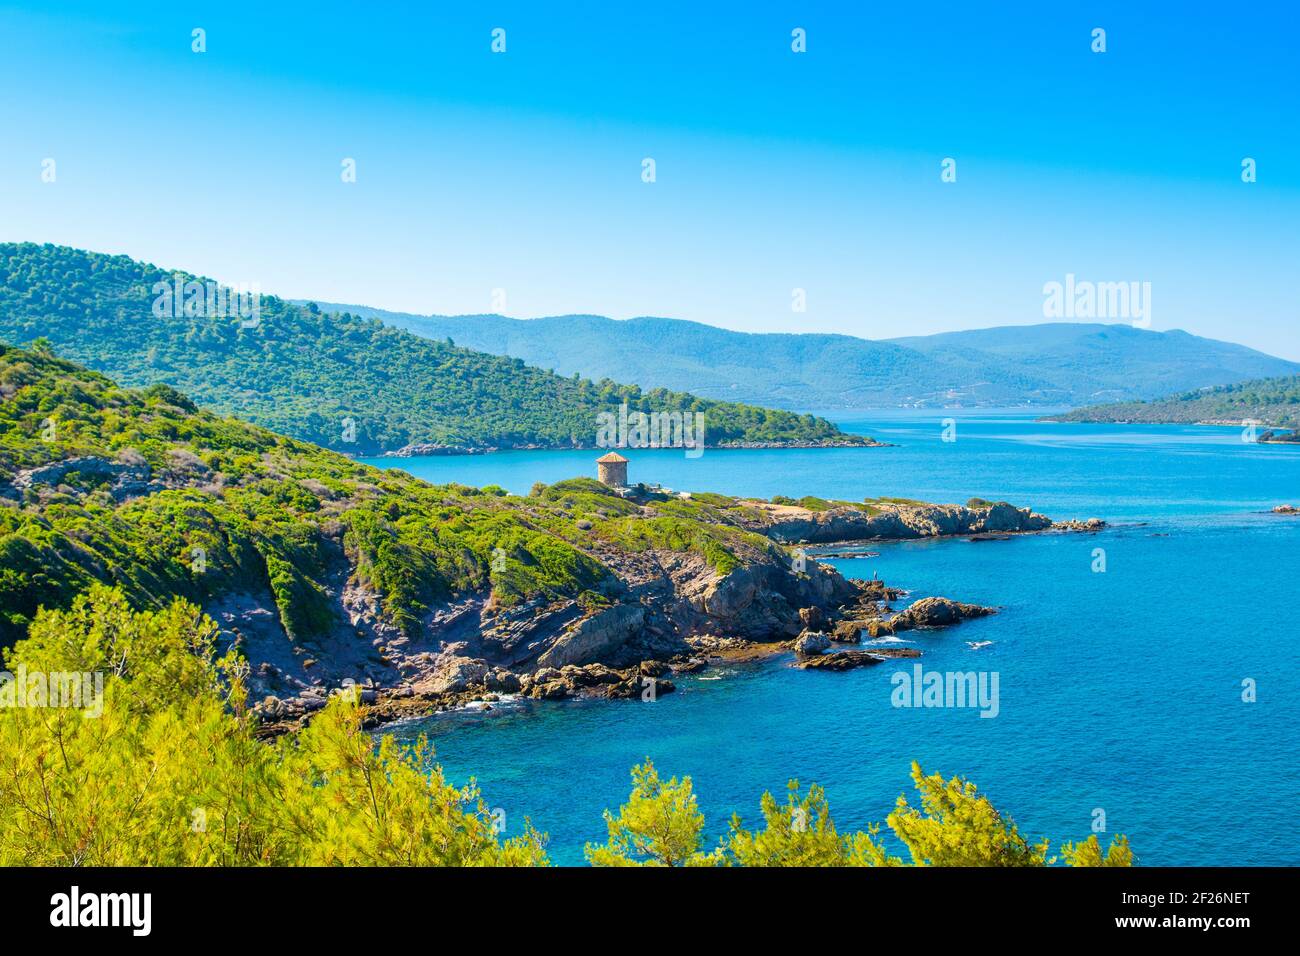 Beautiful Mediterranean landscape with Aegean sea and green hills in Bodrum, Turkey Stock Photo